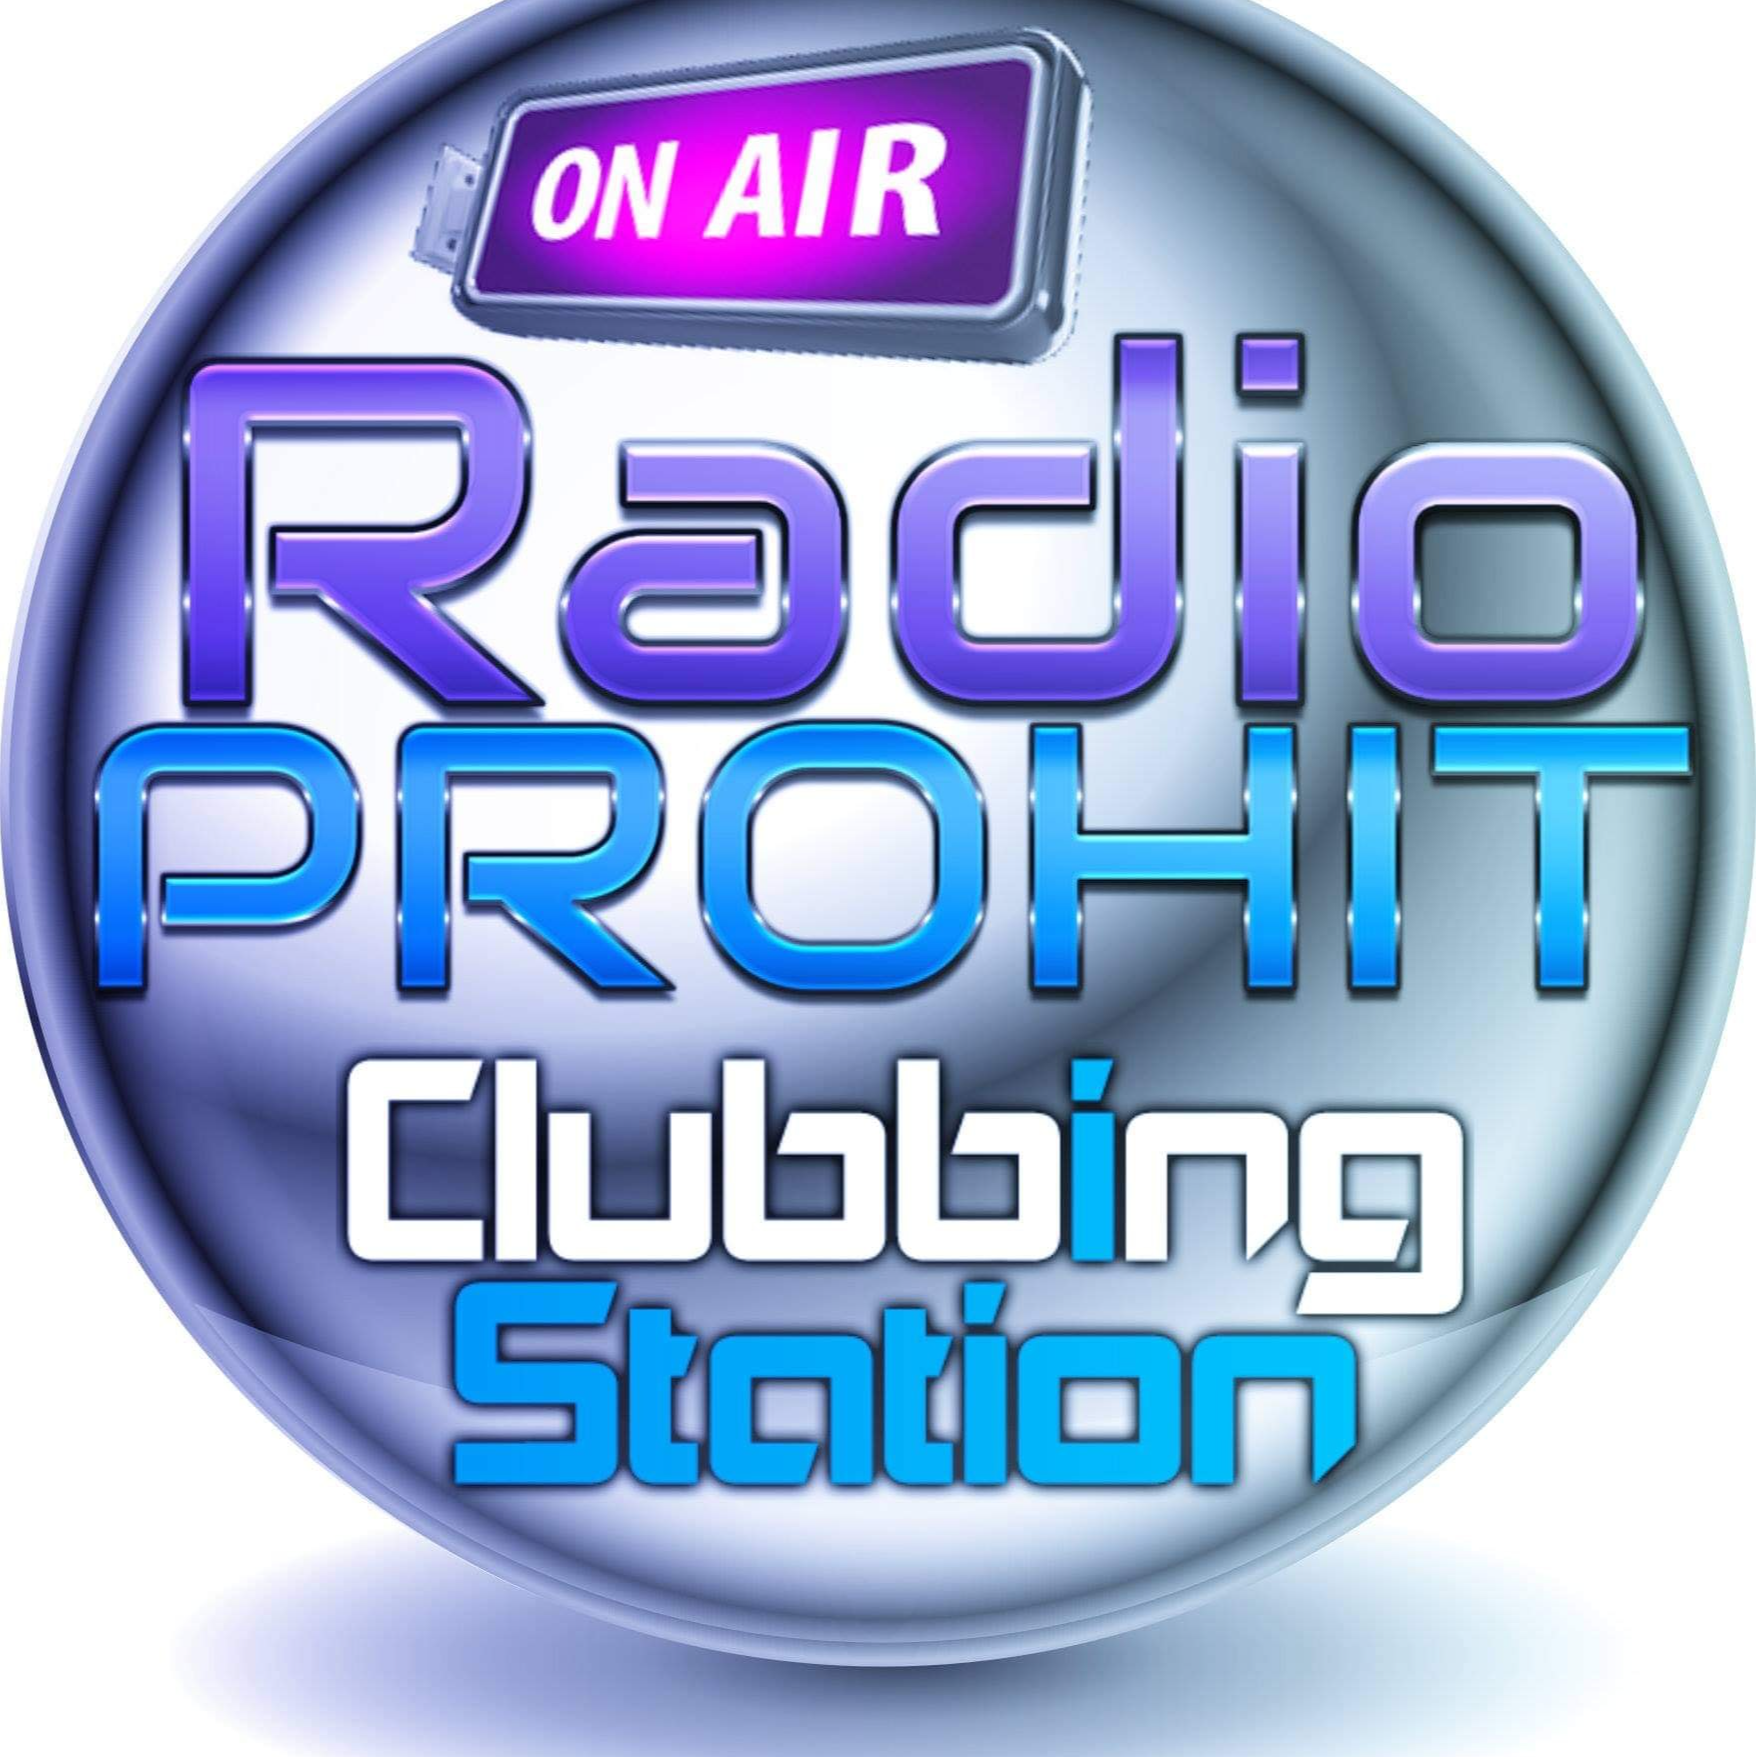 Radio Pro-Hit Romania l HOUSE CLUBBING STATION - www.radioprohit.ro